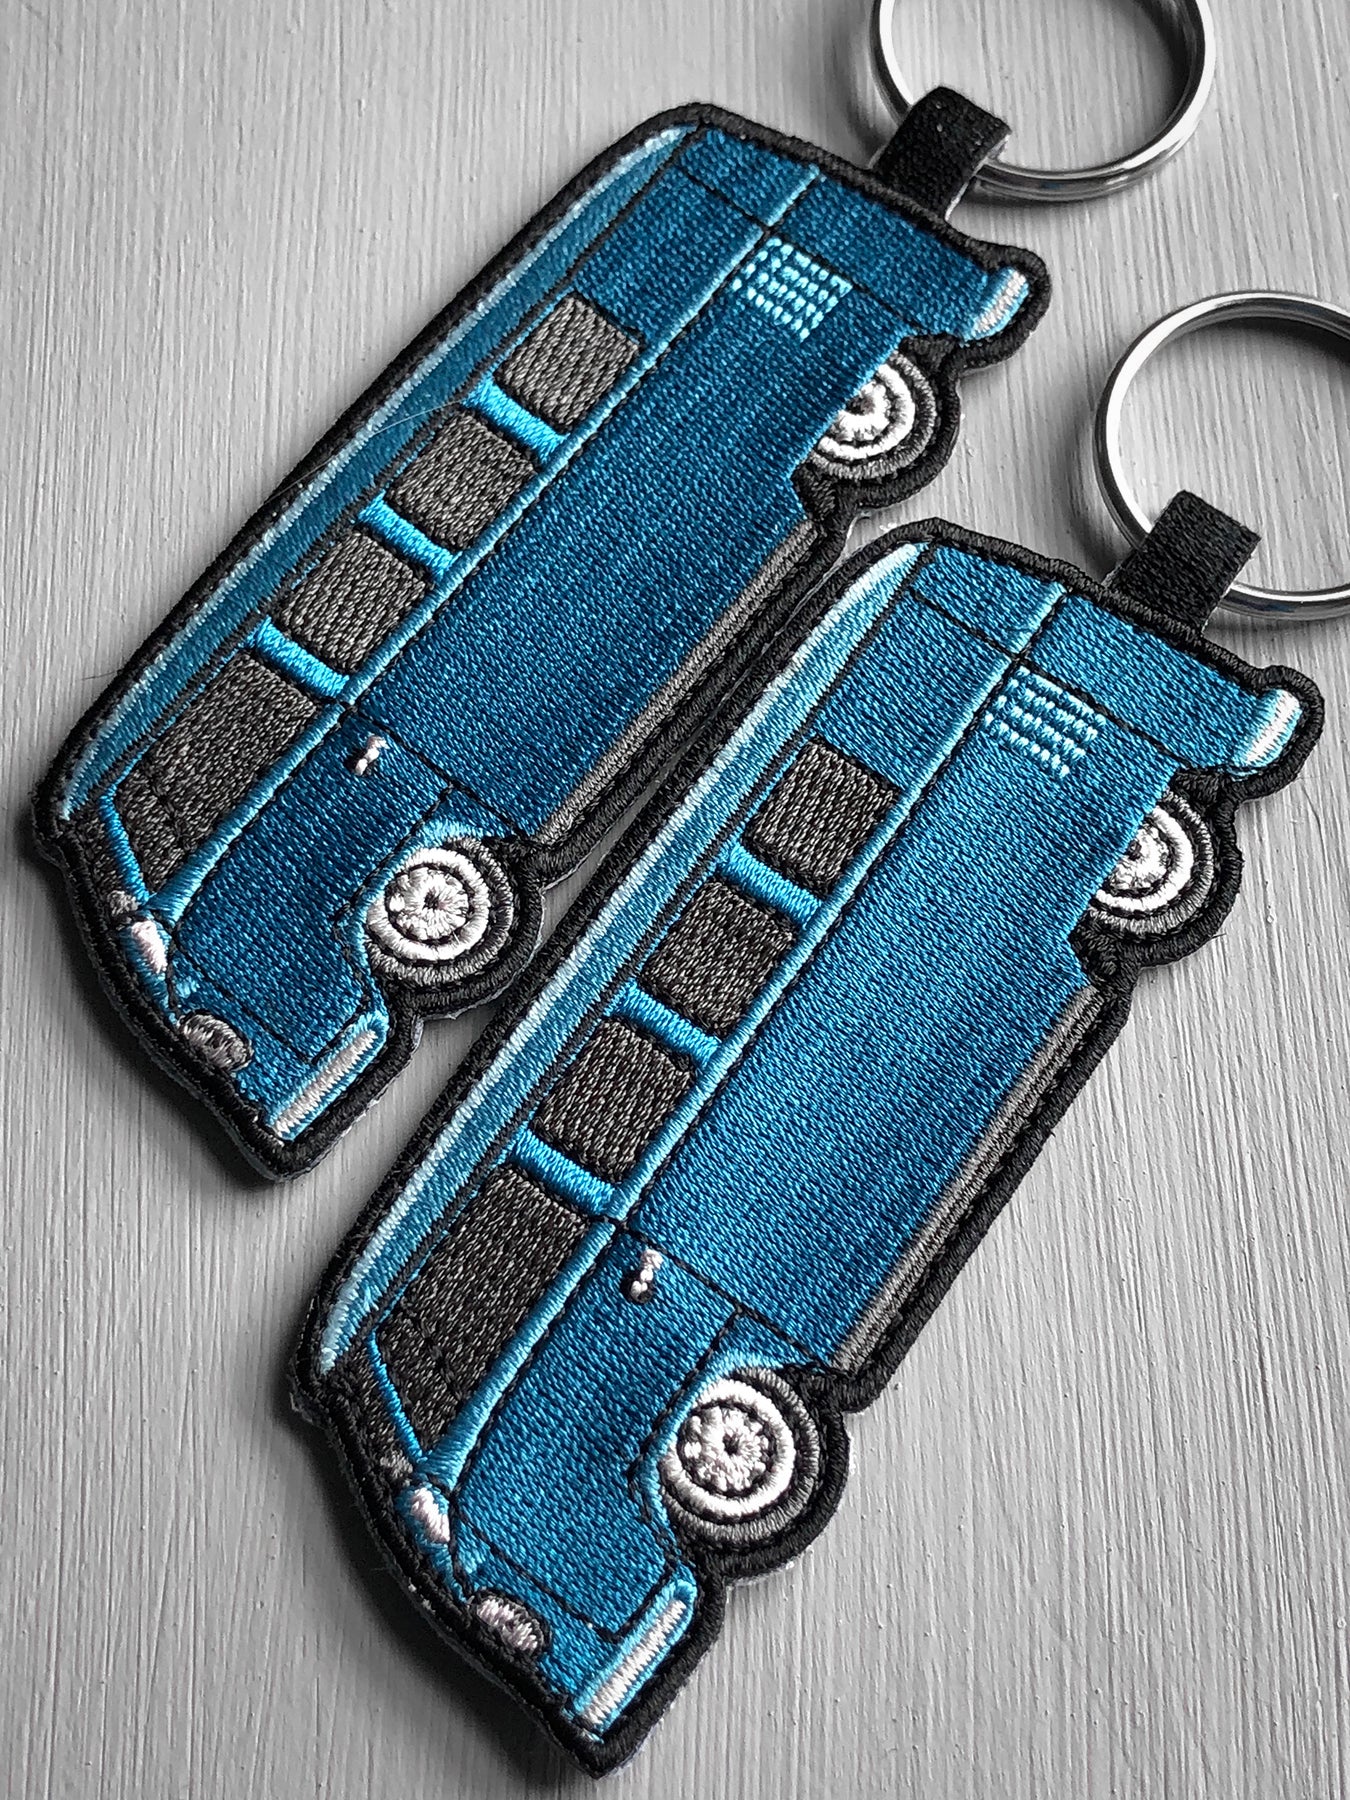 vw bus keychains stitching